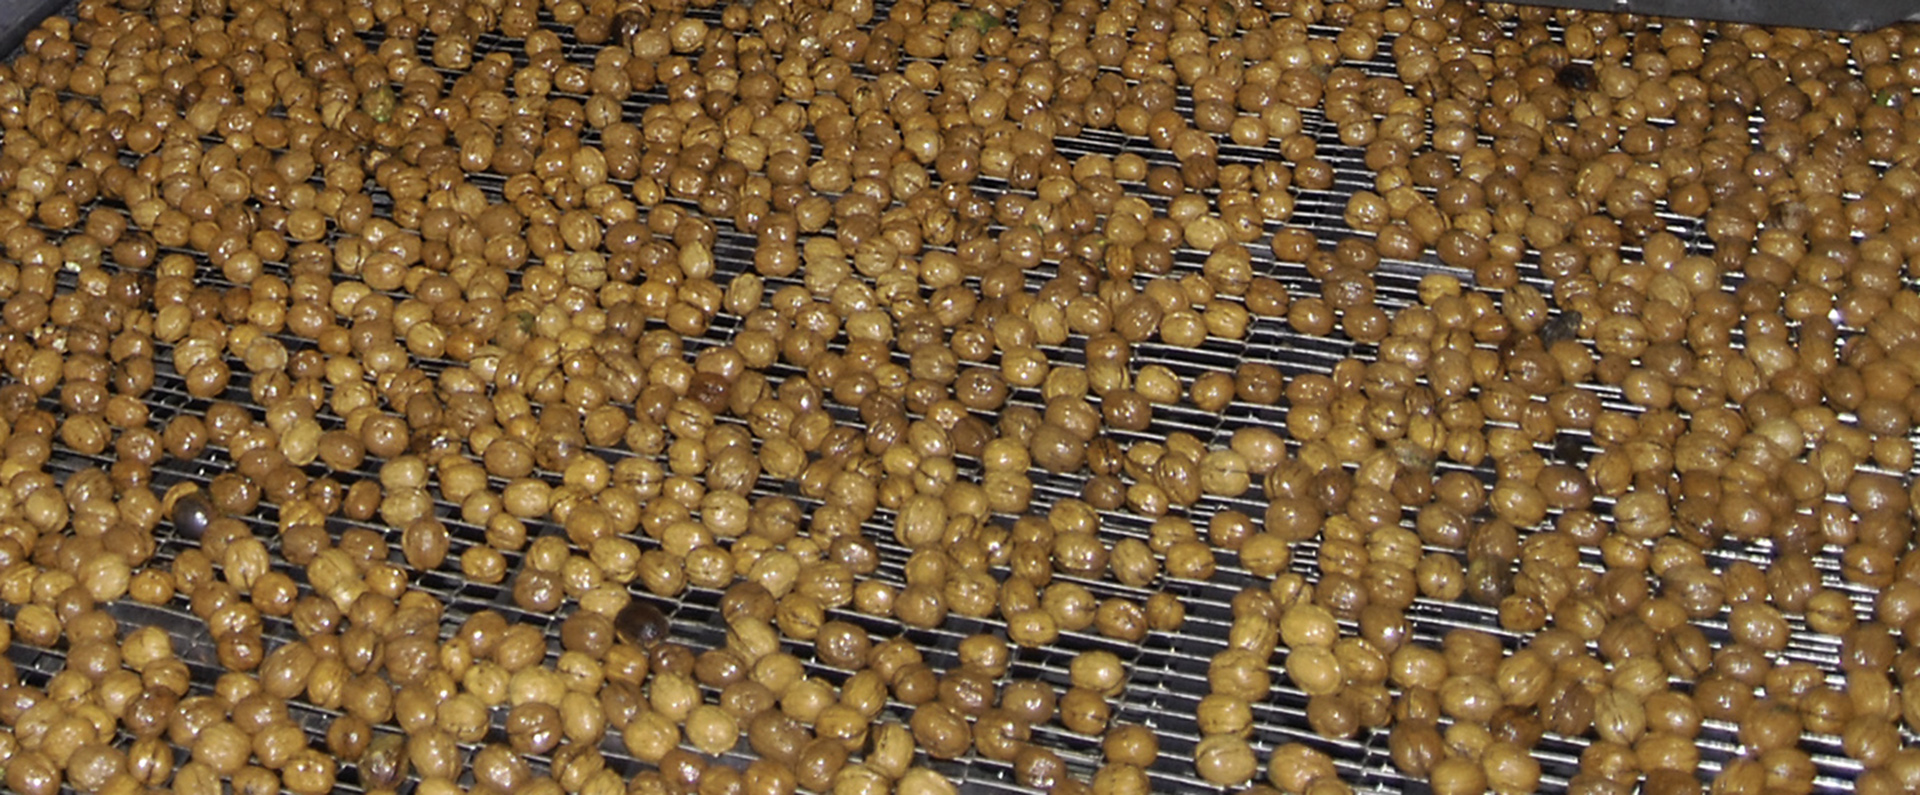 A walnuts being dried